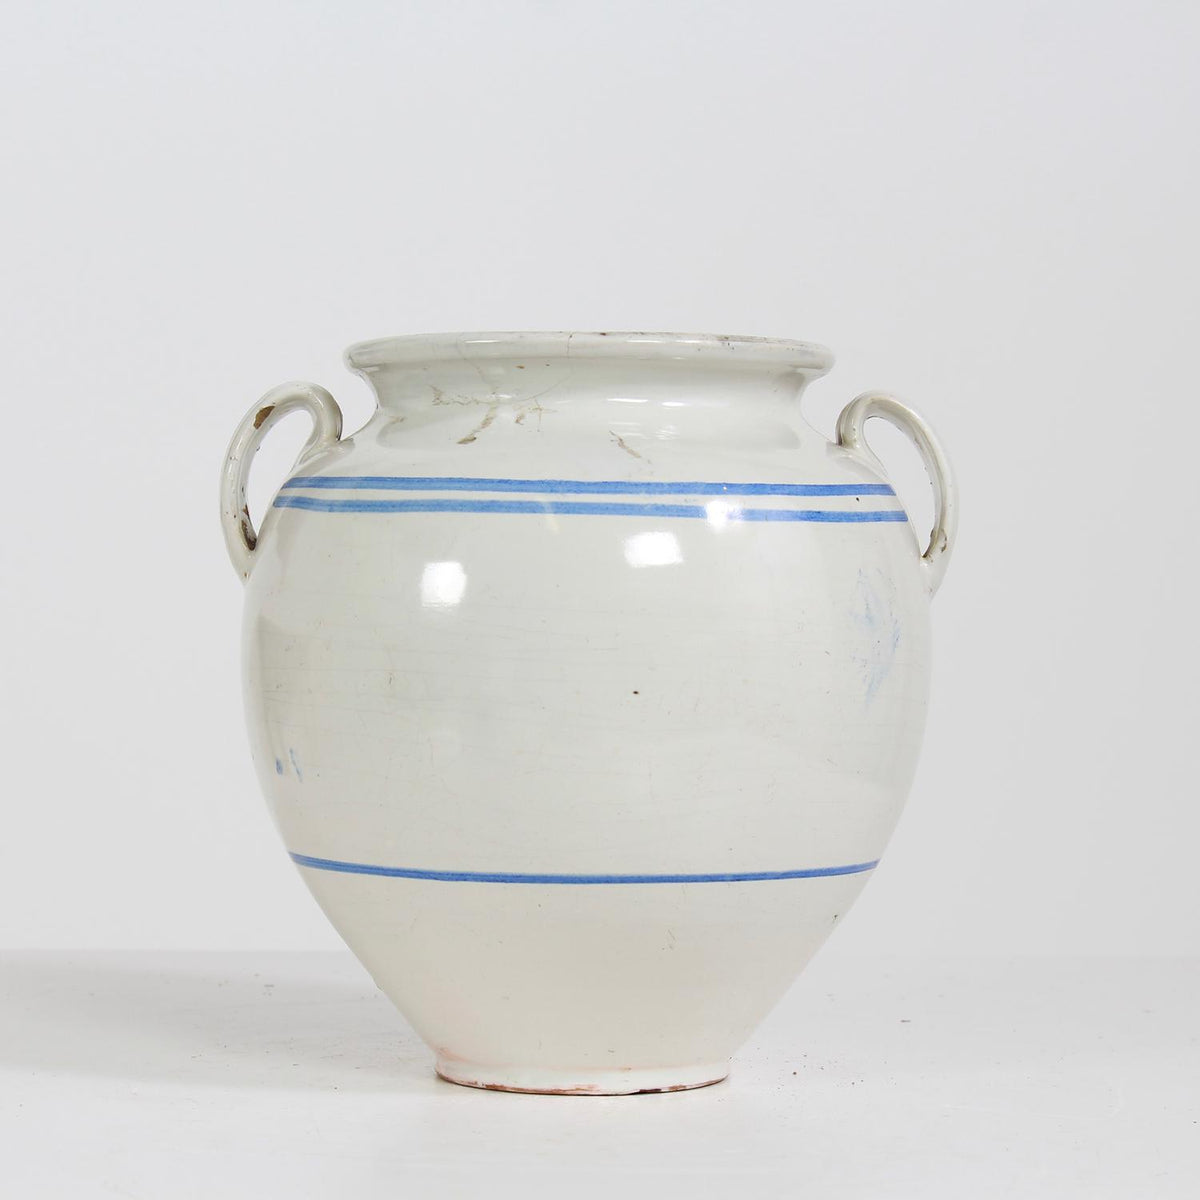 Charming French 19thC White & Blue Glazed Confit pot